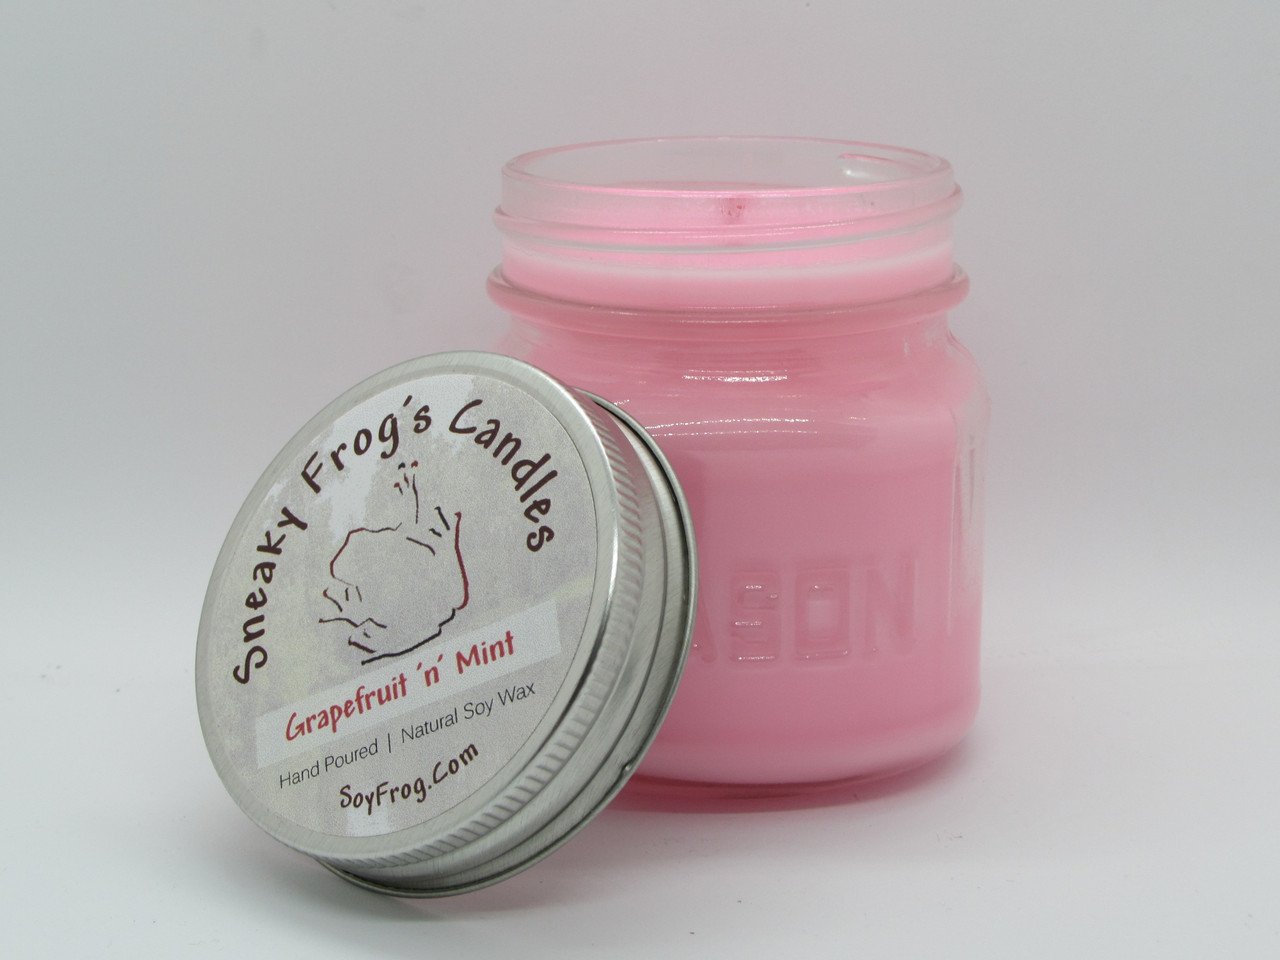 Grapefruit 'n' Mint - Scented Natural Soy Wax Candle - 8 Oz Mason Jar